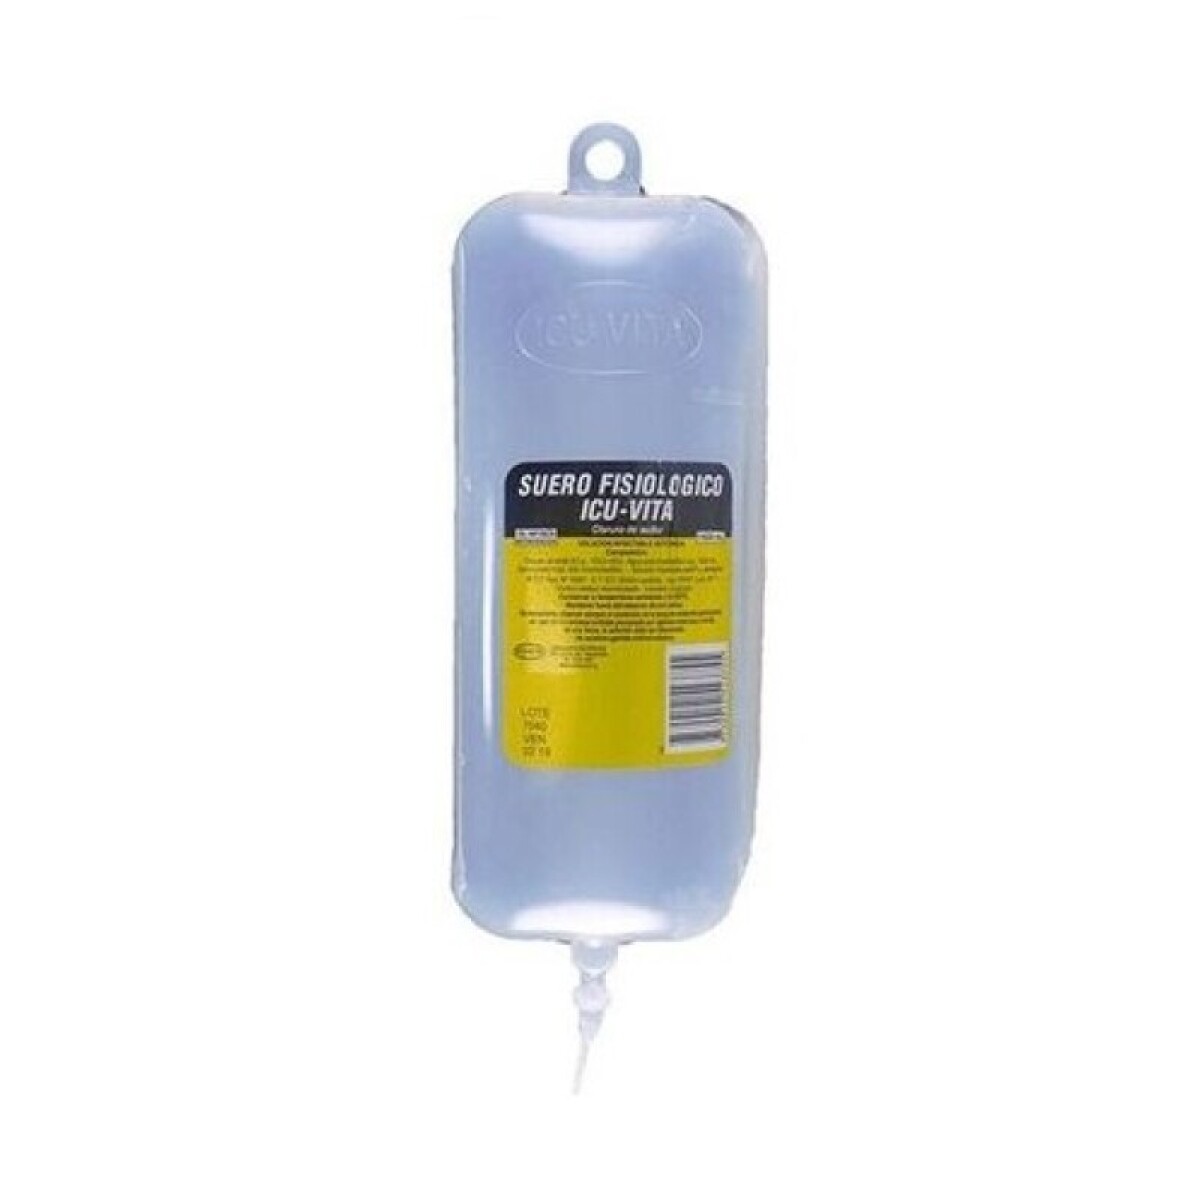 Suero fisiológico/ Isotónico Icu Vita - 250 ml 